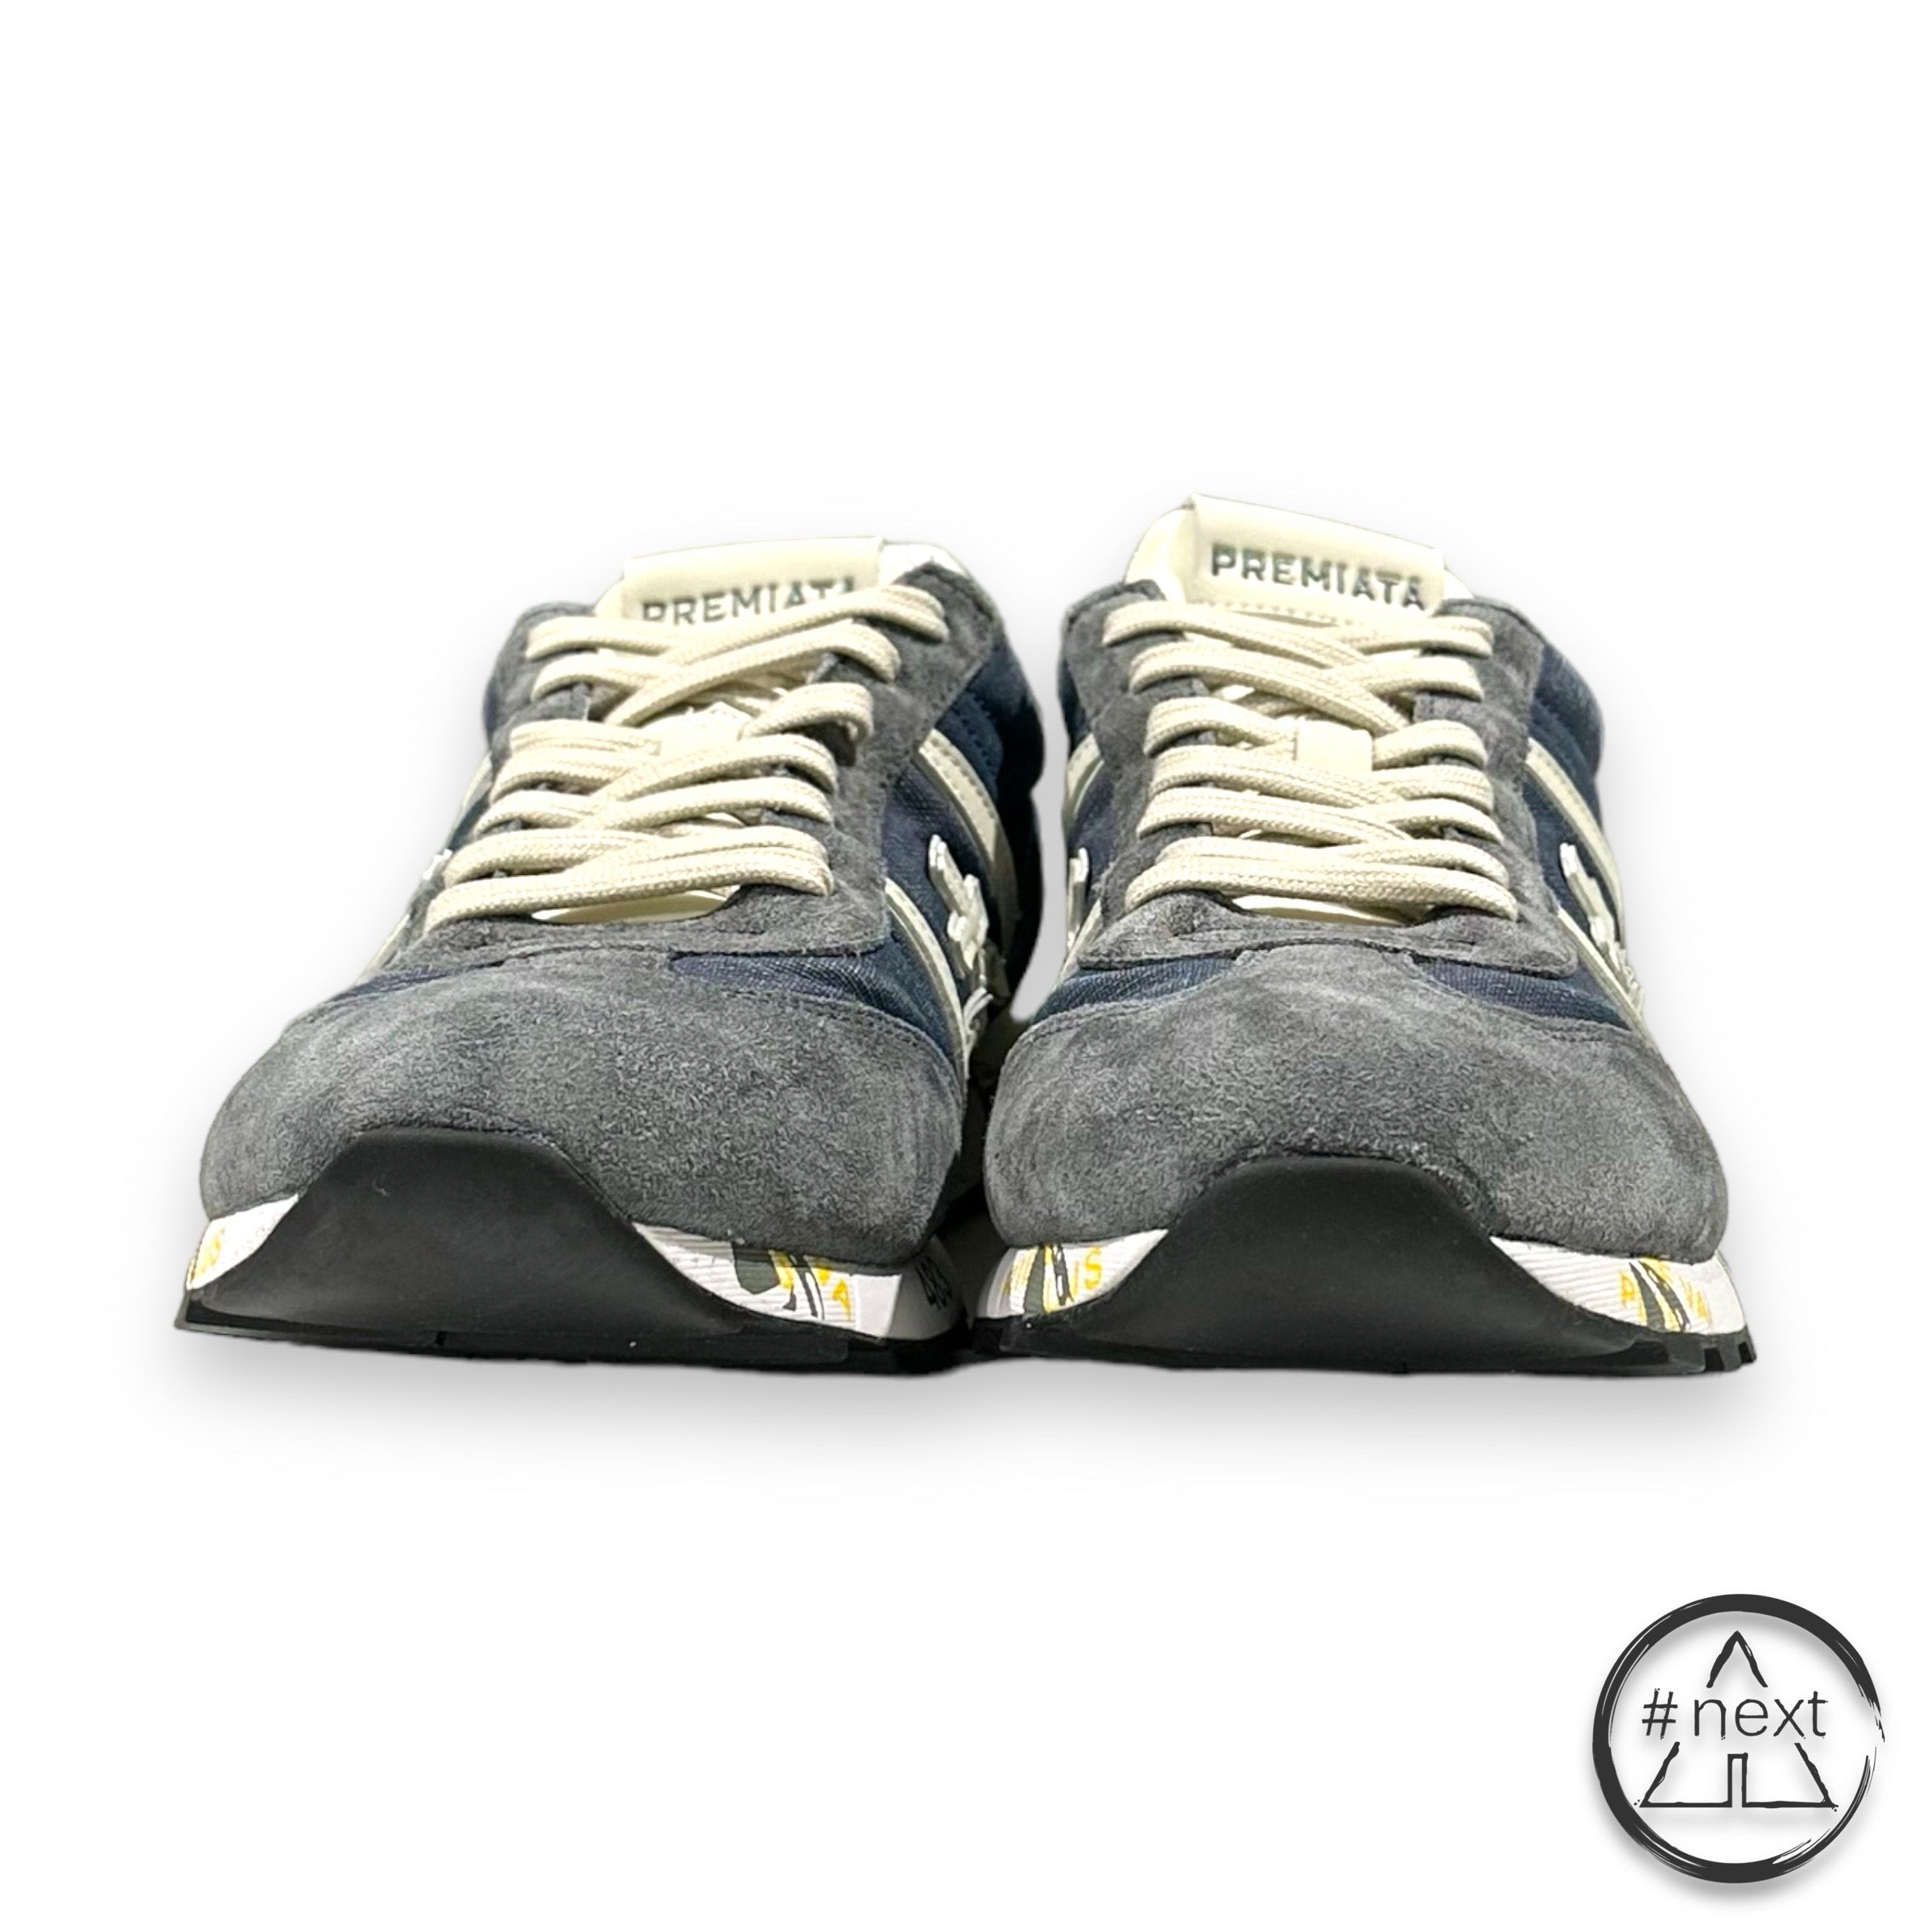 (#O) Premiata - sneakers LUCY var. 6620 - Blu denim, grigio. - ANDY #NEXT